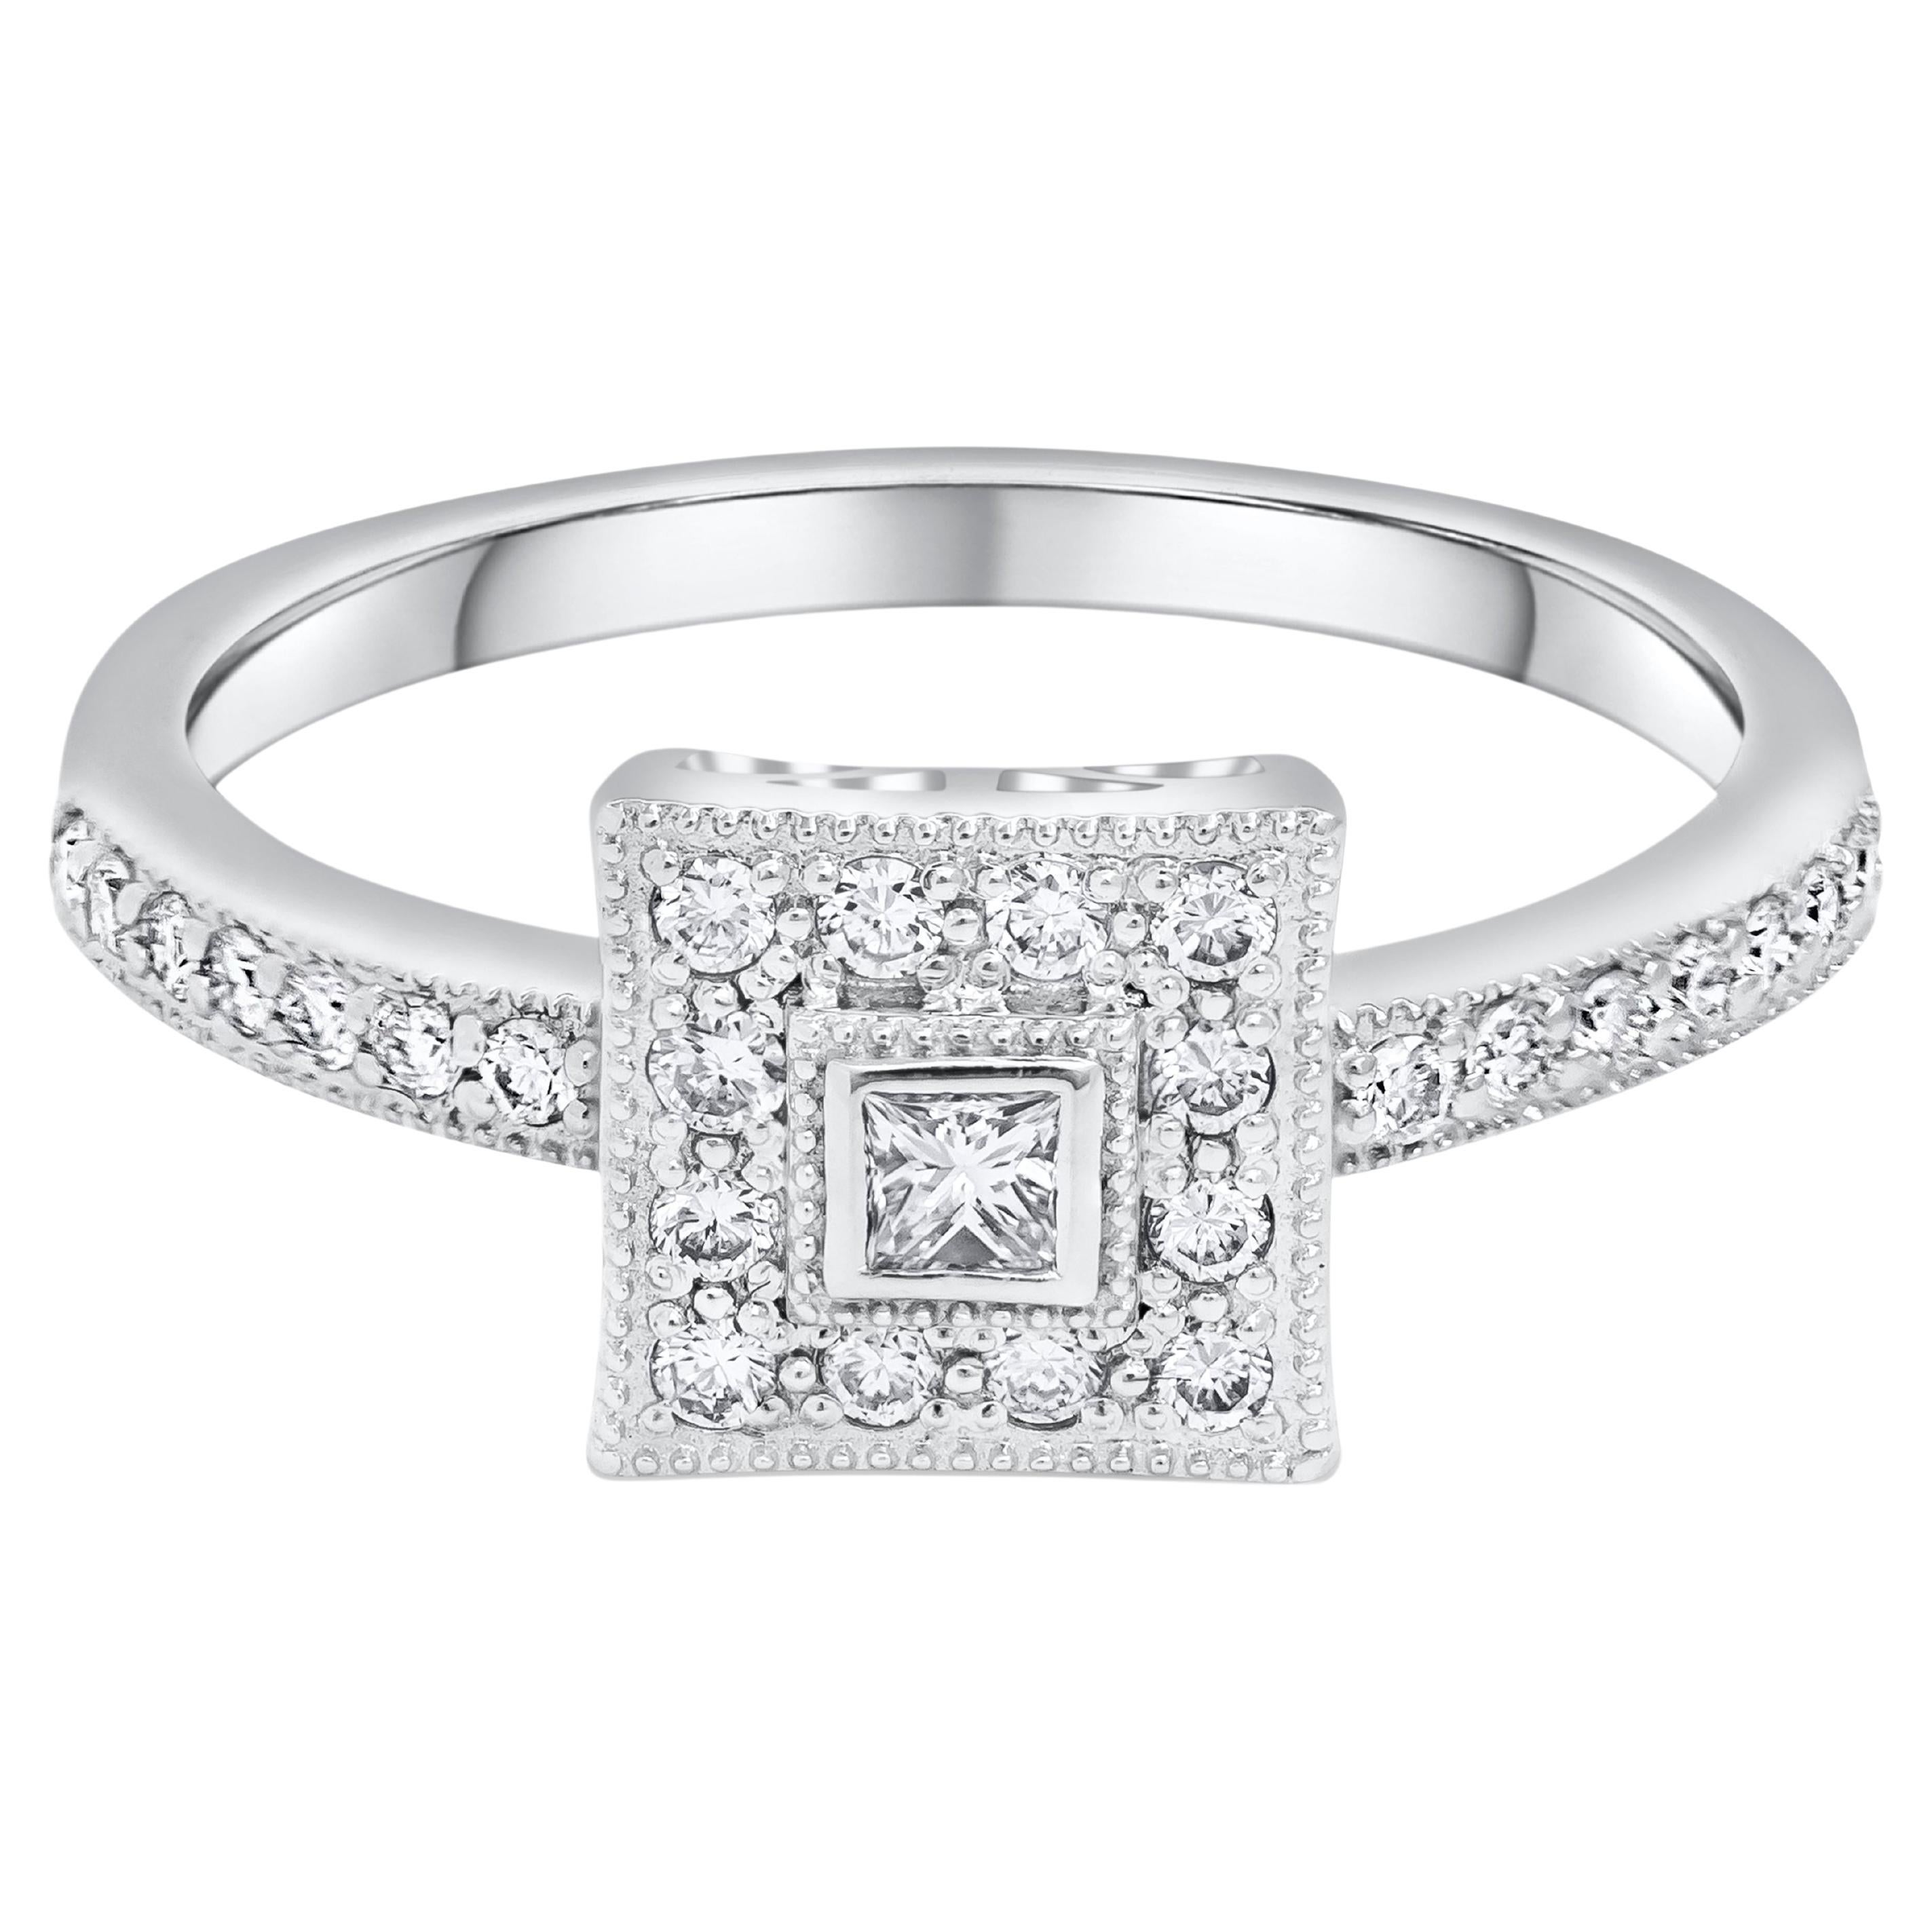 Charriol 0.37 Carats Total Princess Cut Diamond Antique Engagement Ring For Sale